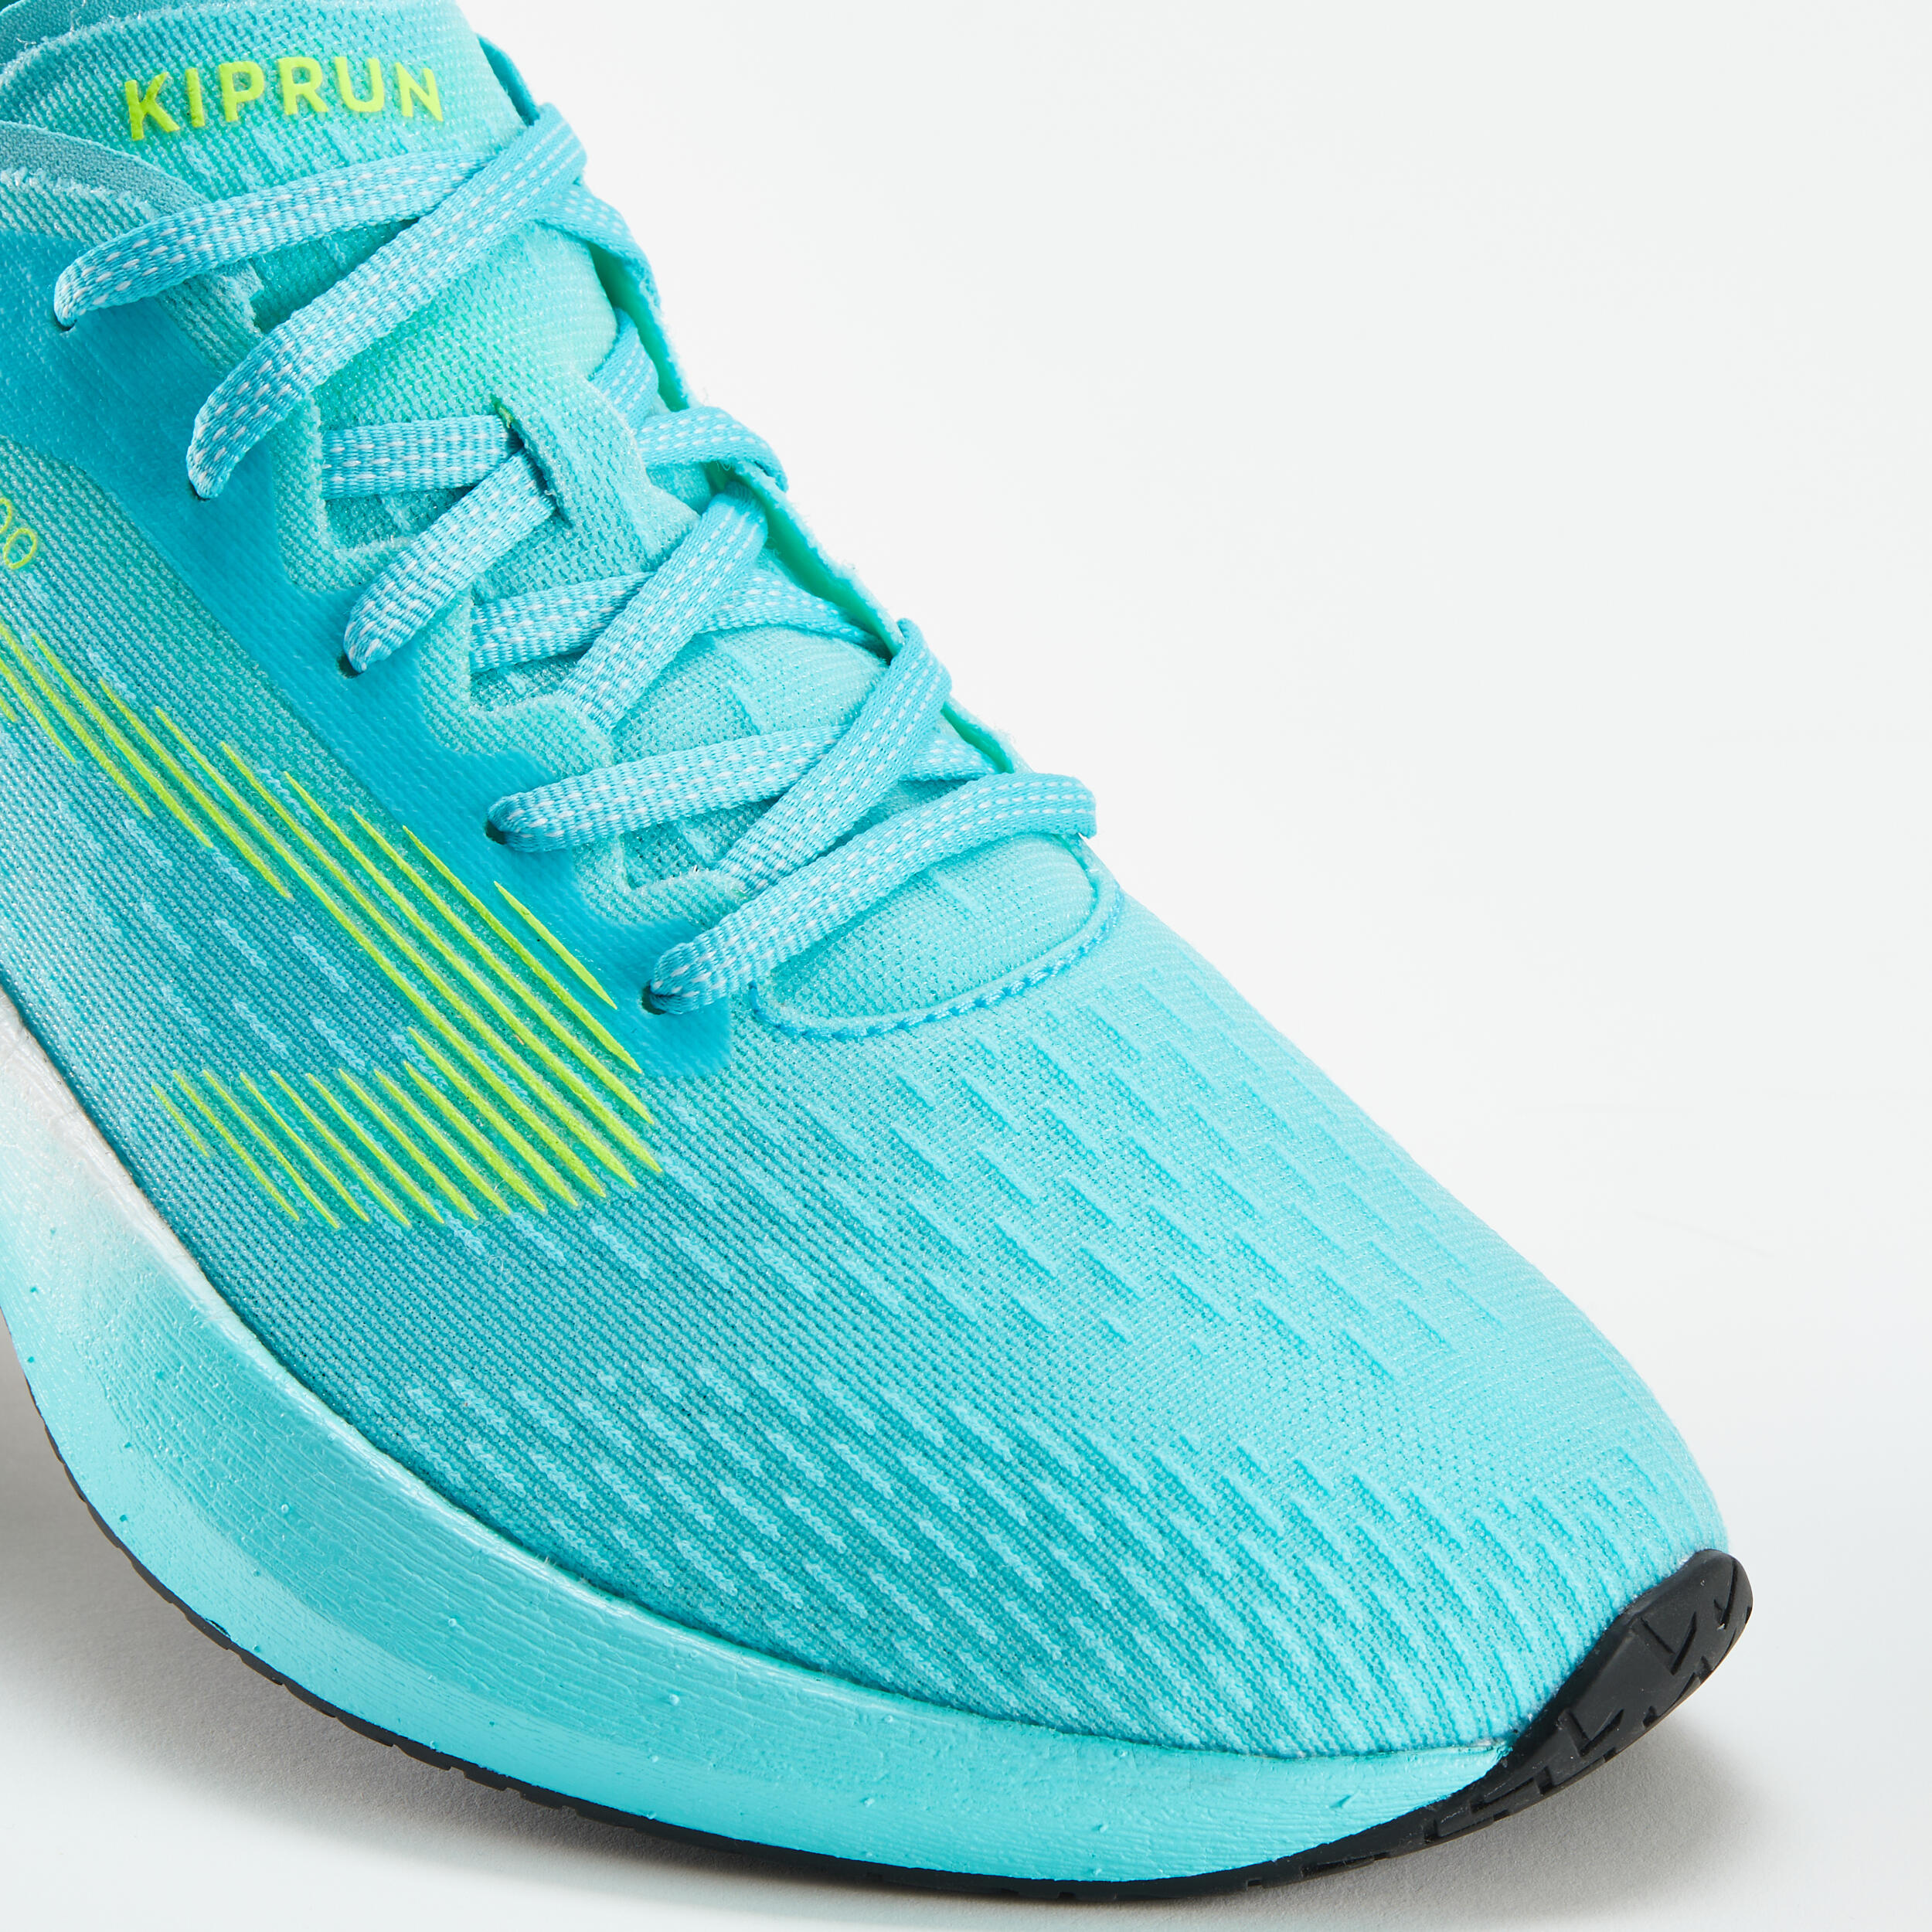 Men's Running Shoes - KD 900 - KIPRUN